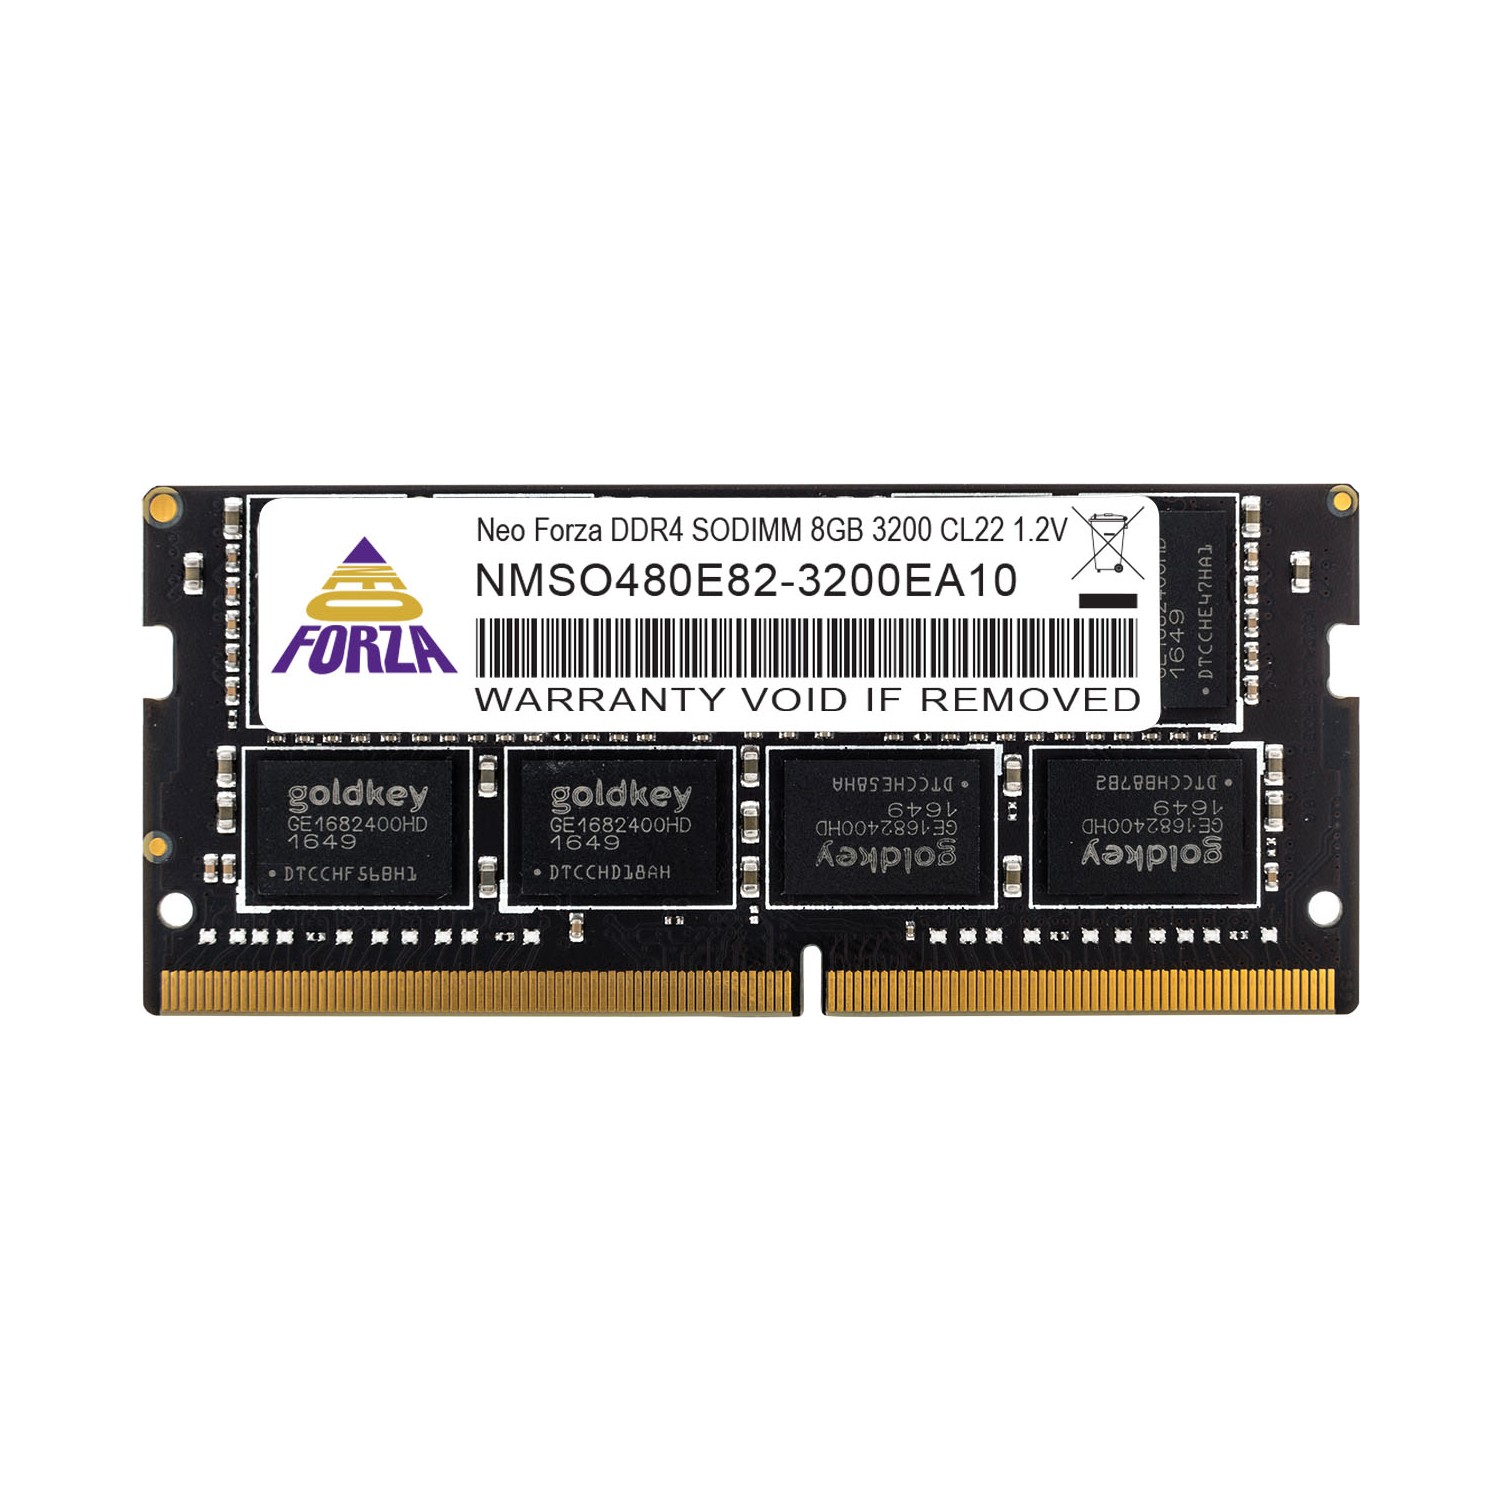 NEOFORZA 8GB 3200MHz CL22 1.2V DDR4 SODIMM - NMSO480E82-3200EA10  